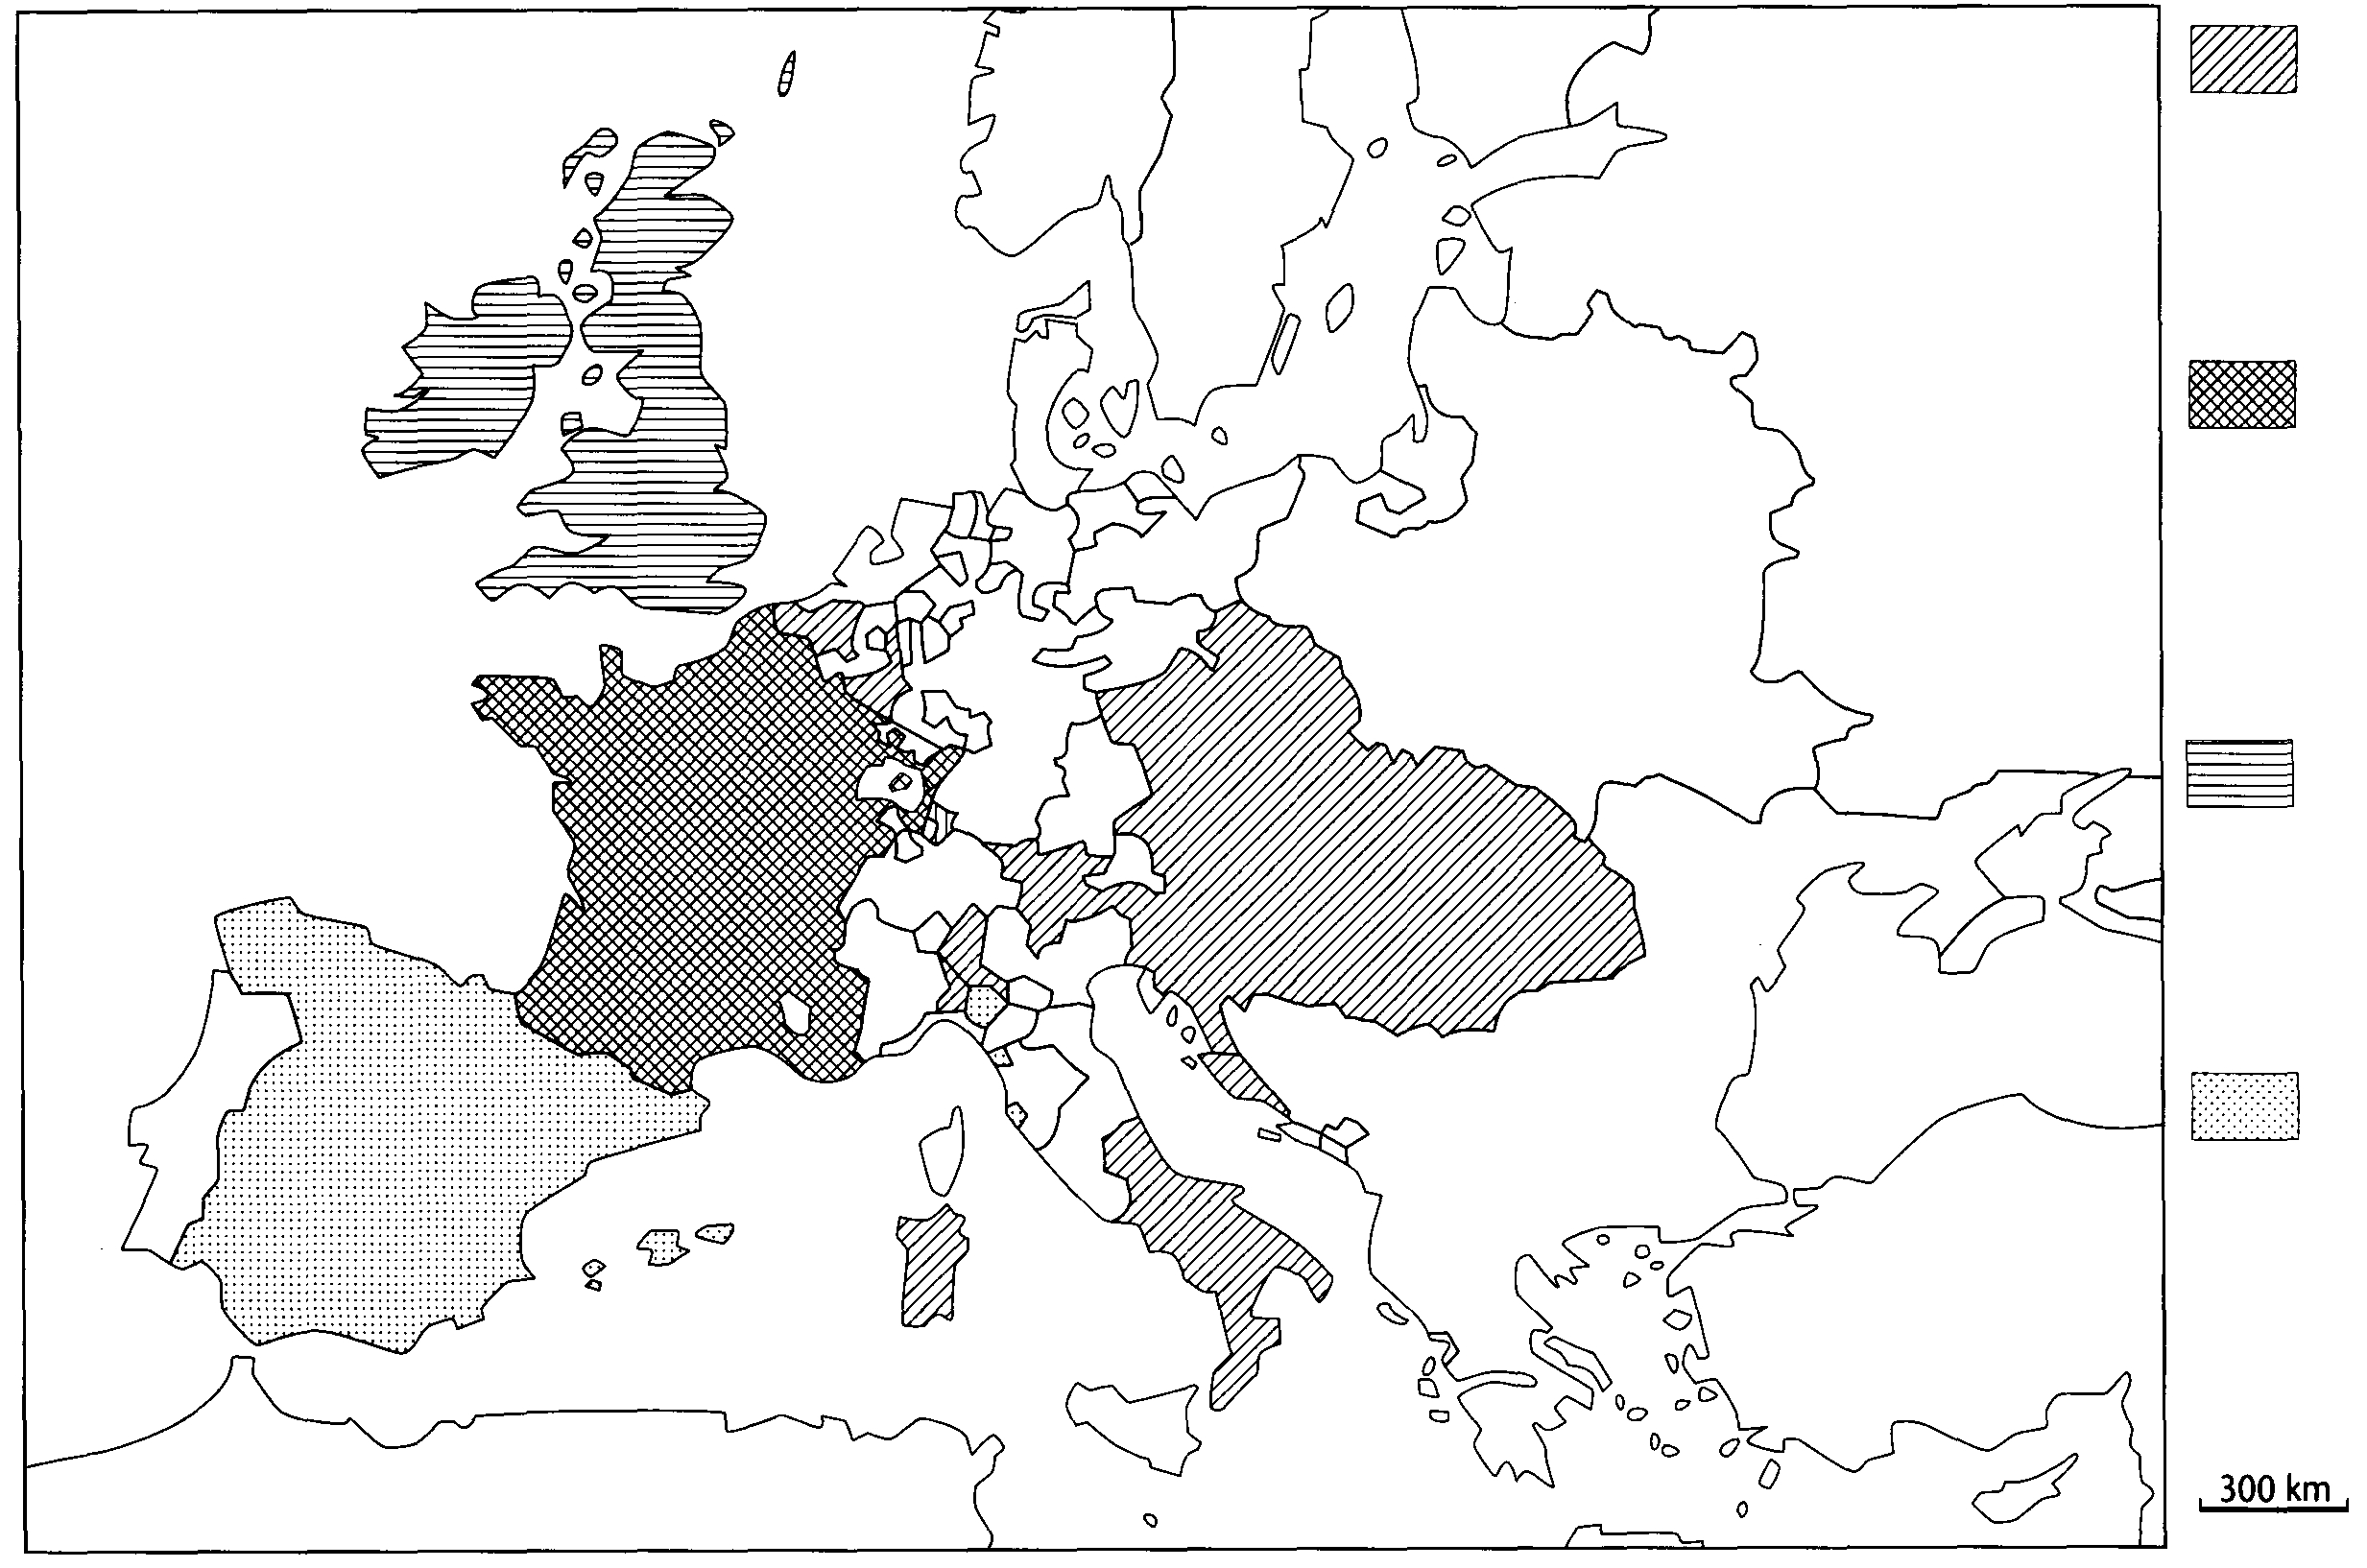 1715 Europe - Histographie encequiconcerne Carte Vierge Europe